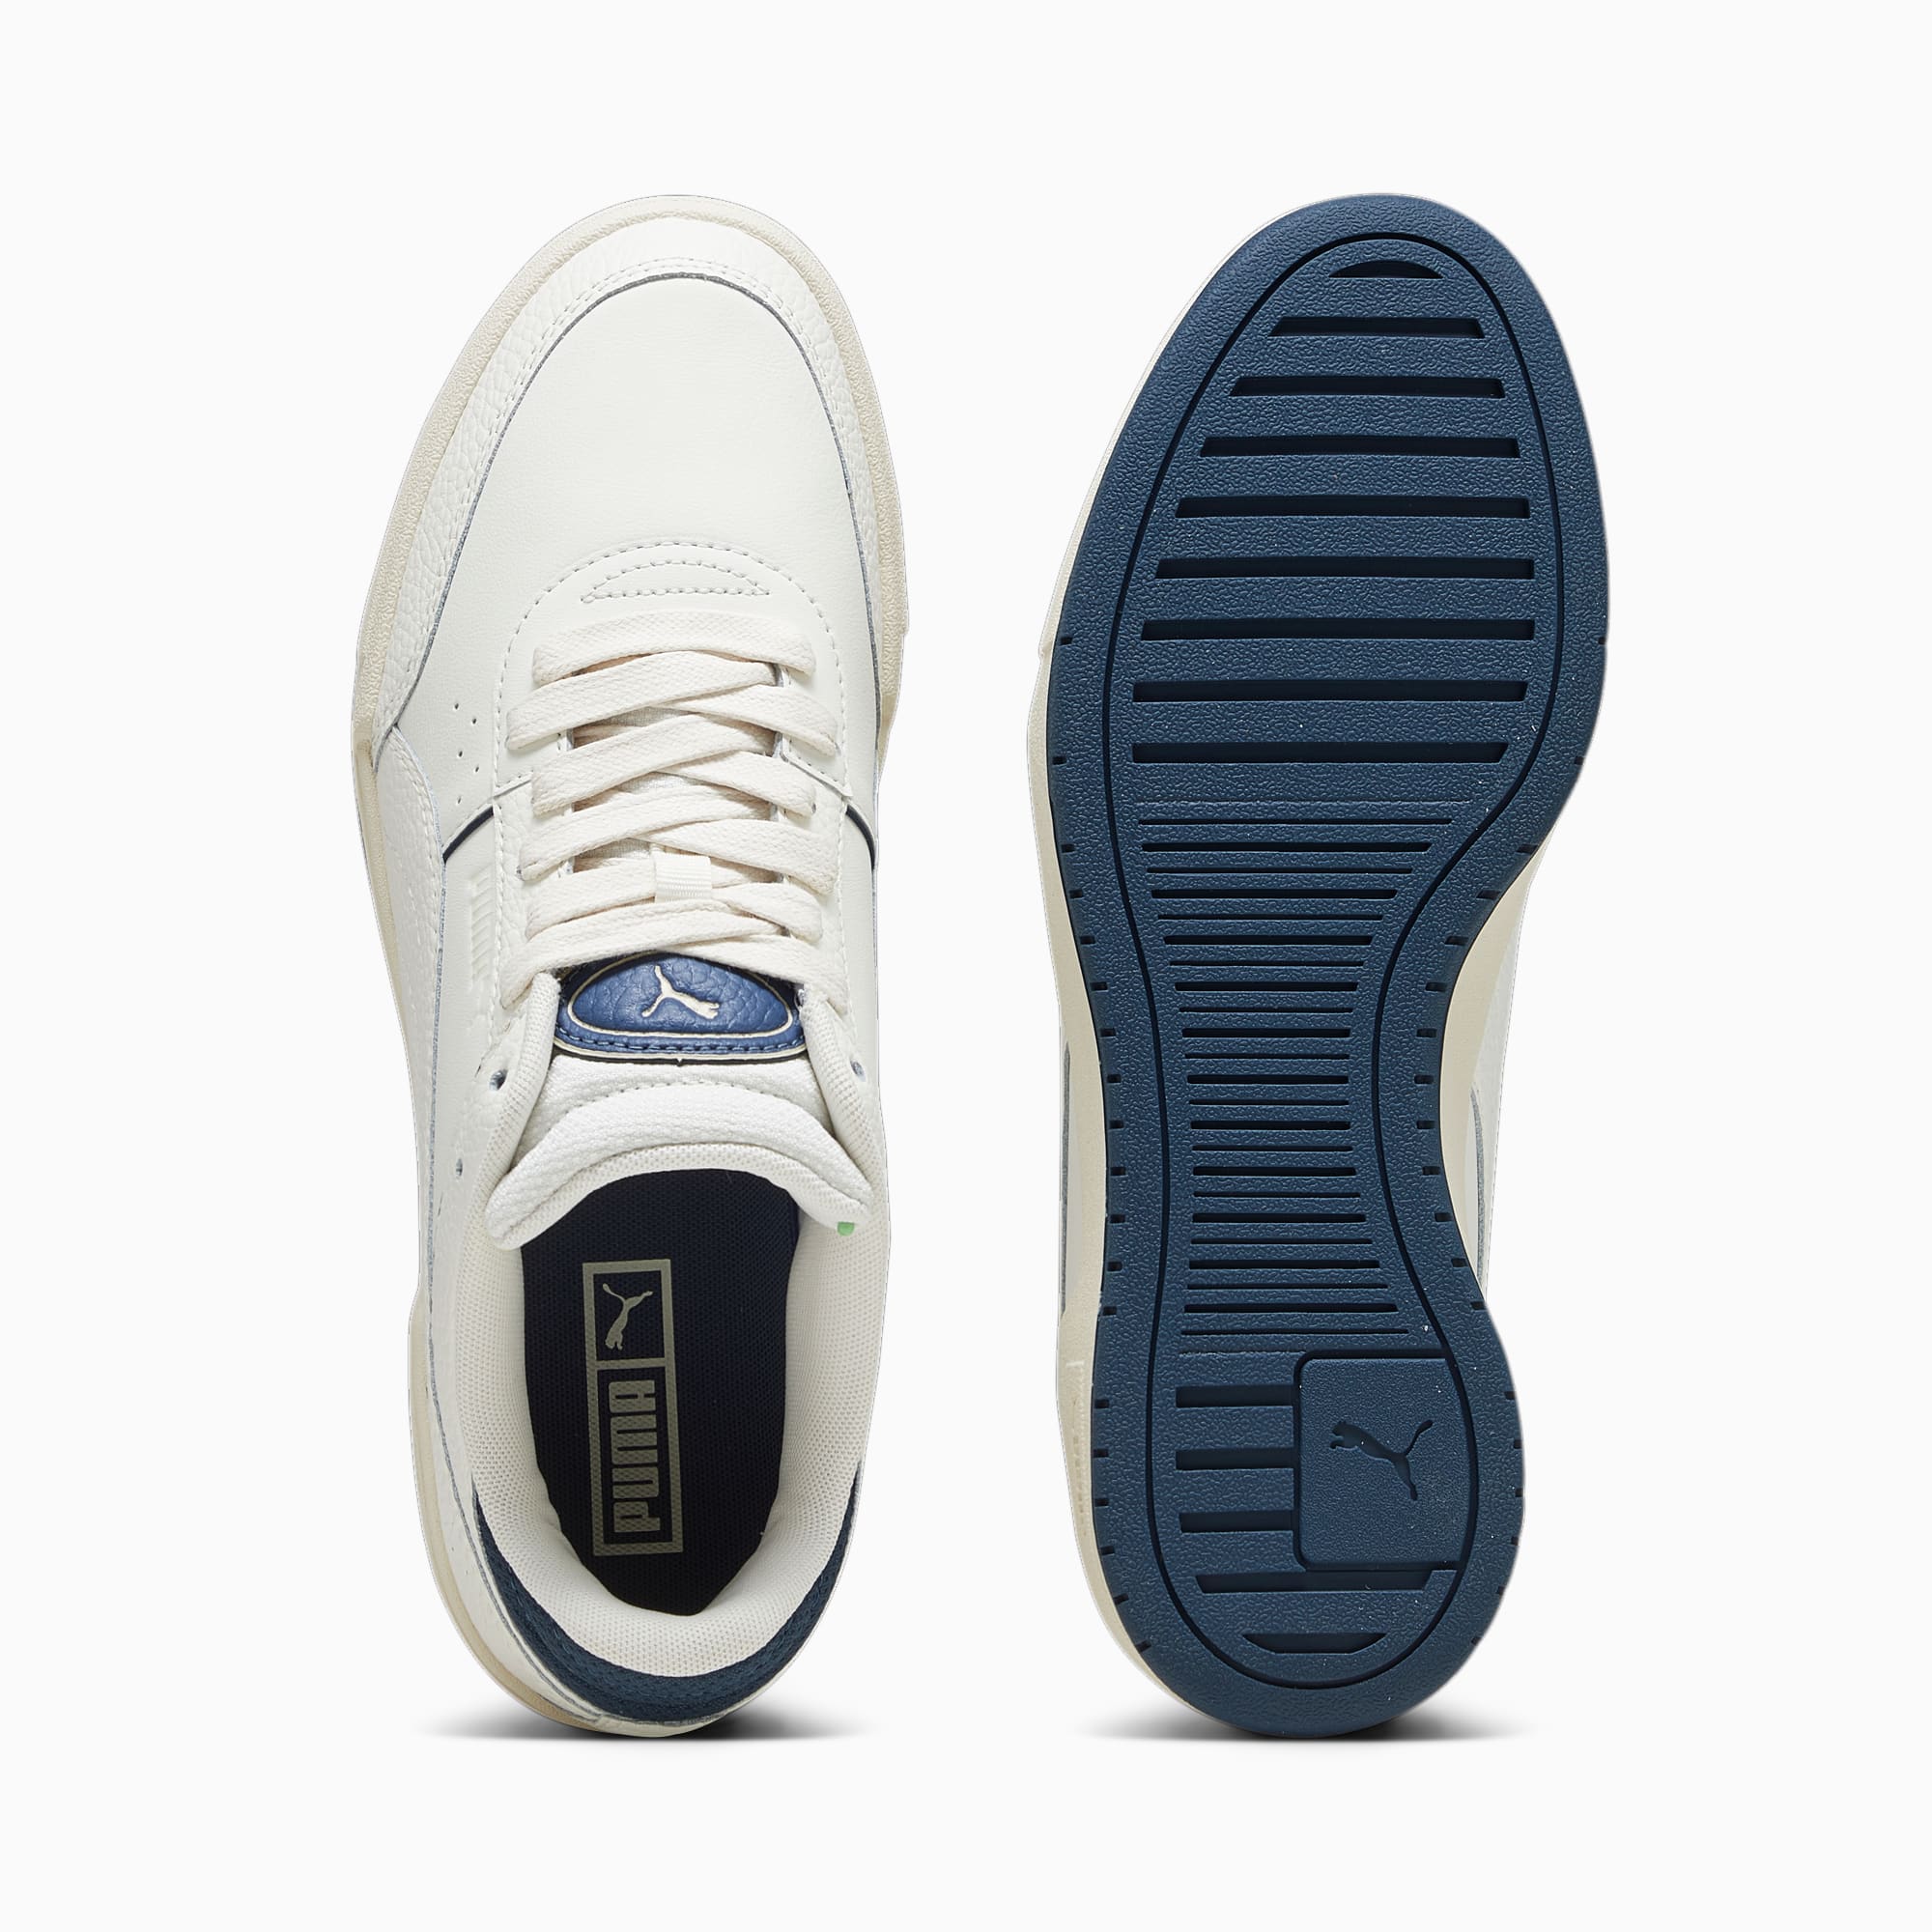 PUMA Chaussure Sneakers De Sport CA Pro, Blanc/Bleu